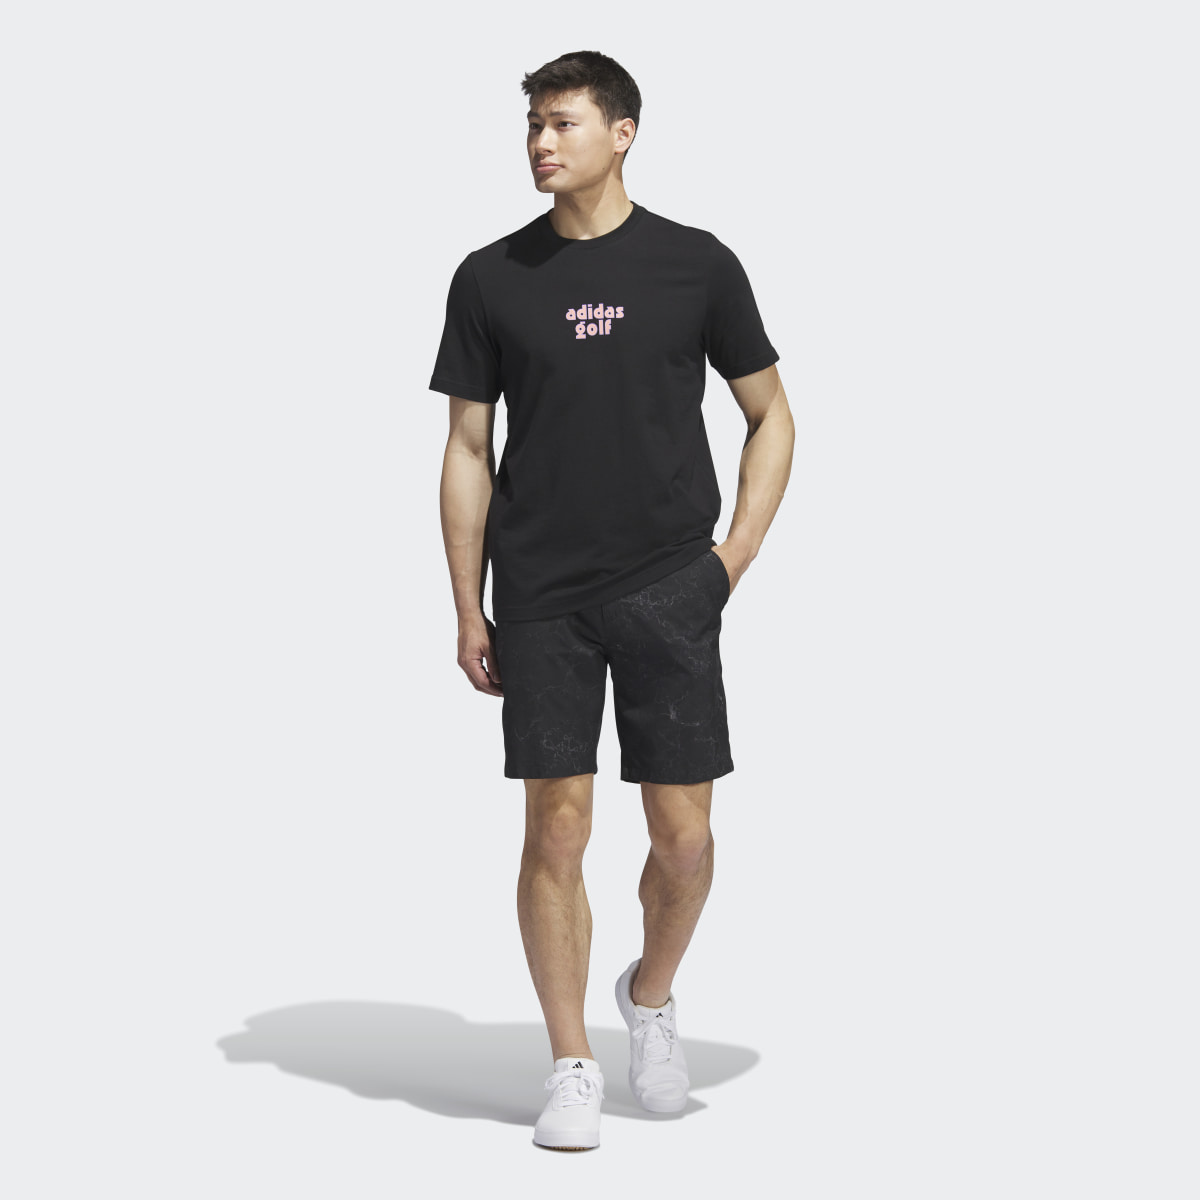 Adidas Golf Graphic T-Shirt. 6